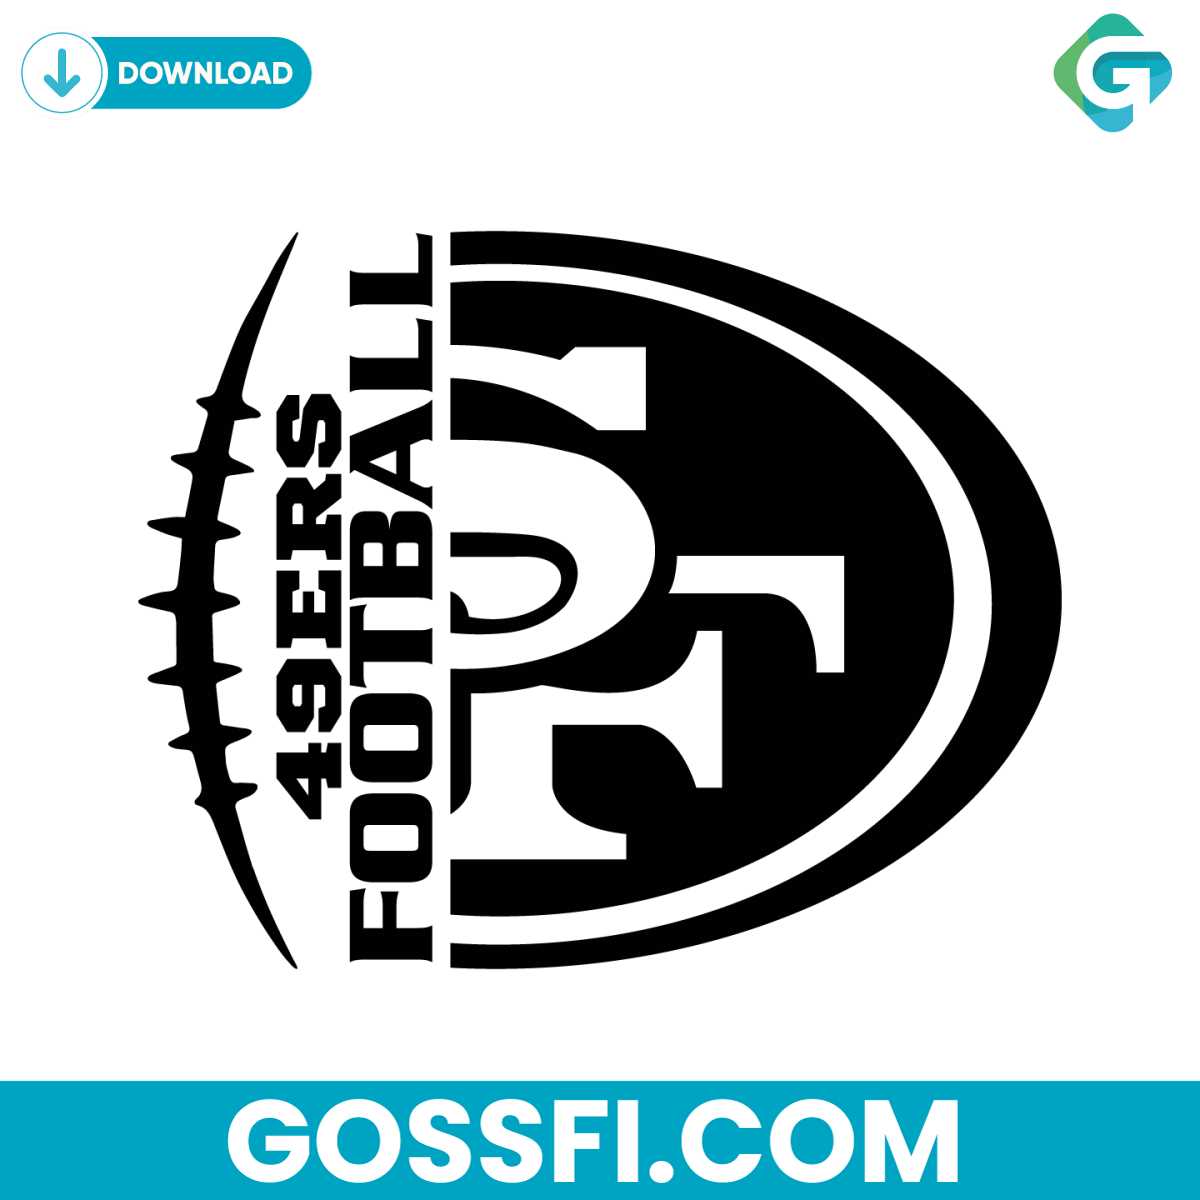 san-francisco-49ers-football-logo-svg-digital-download